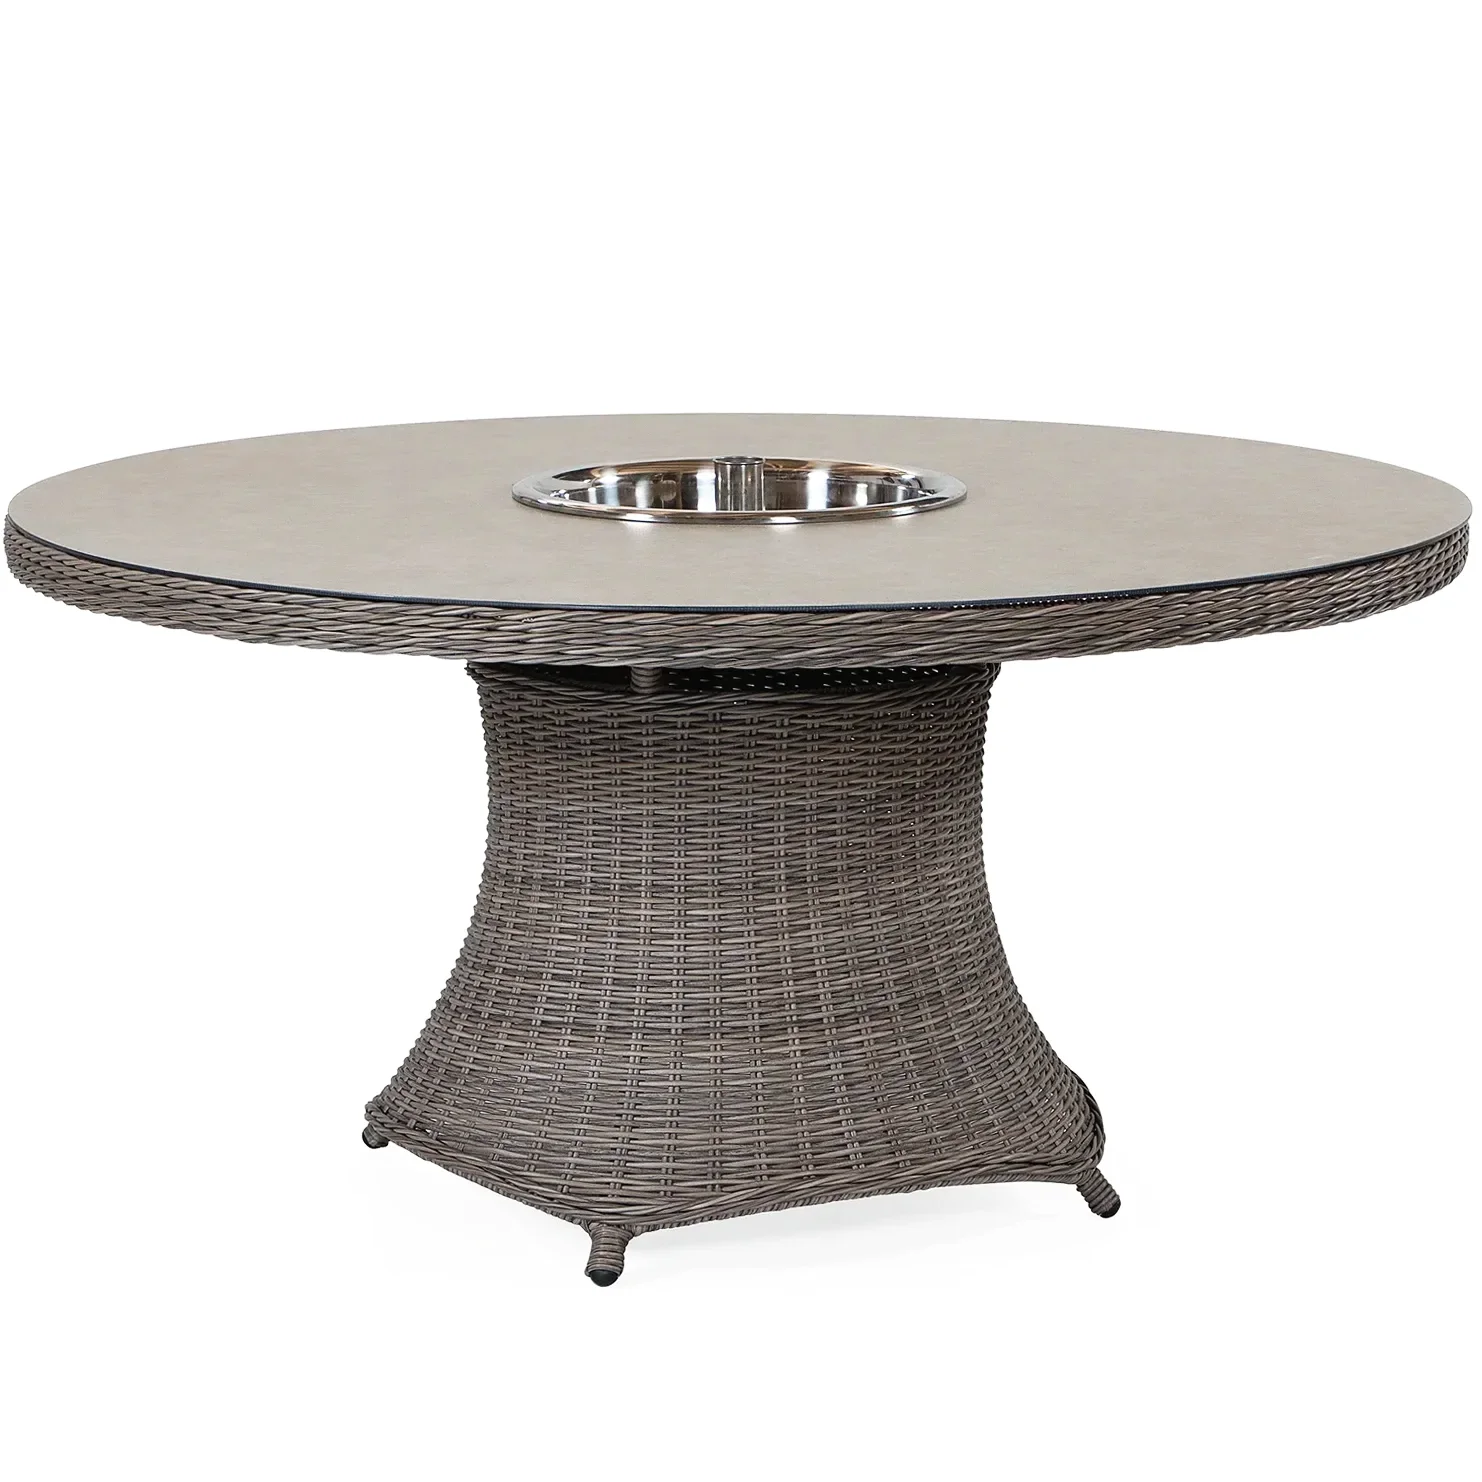 Hastings bord drivved/keramiktopp Ø150 cm, med ishink